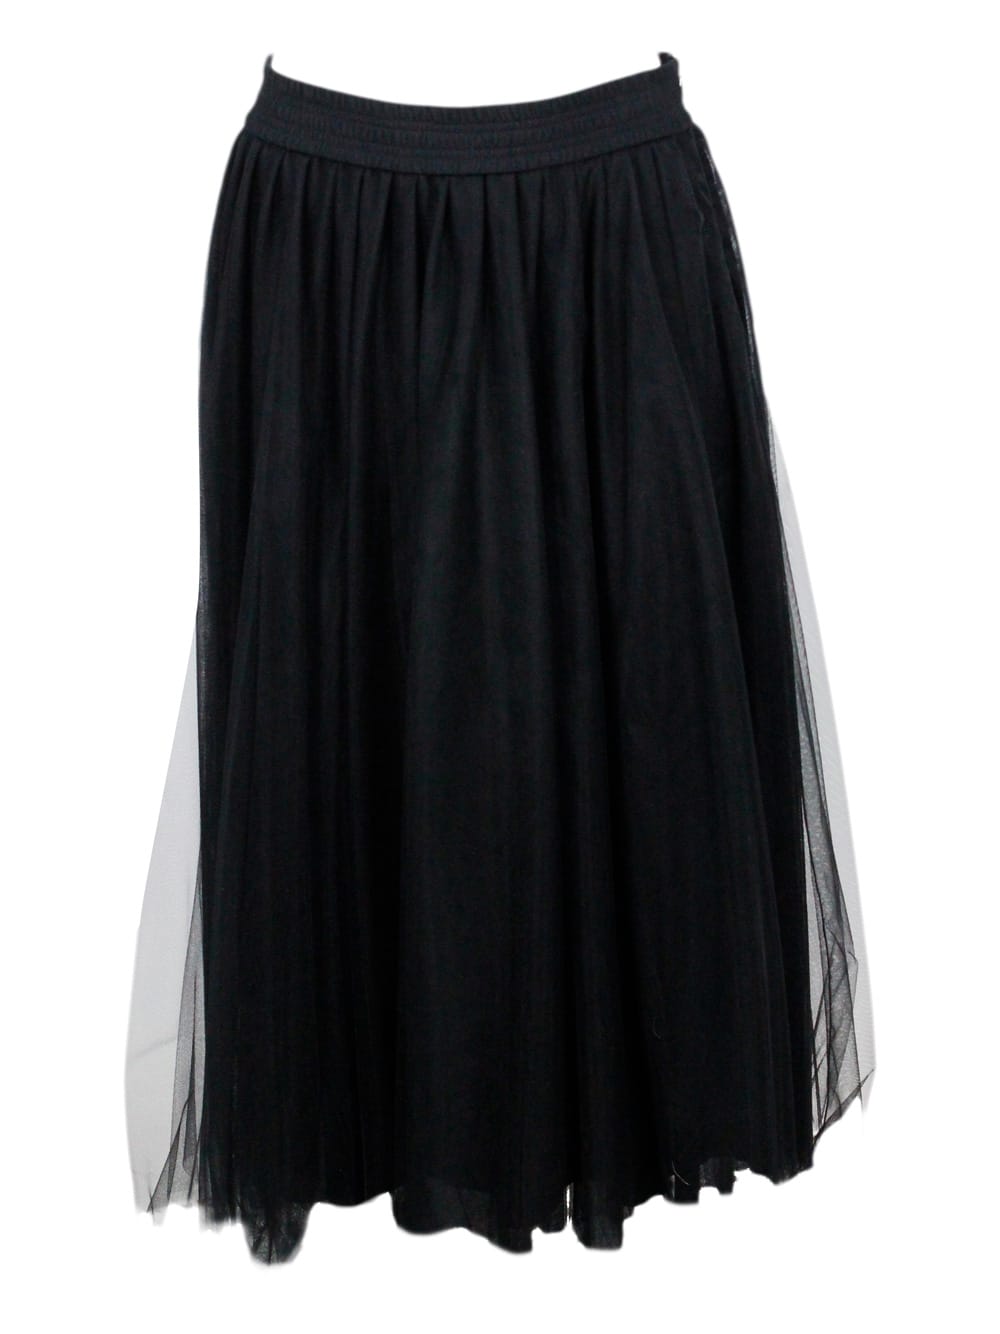 Long Tulle Skirt With Elastic Waist